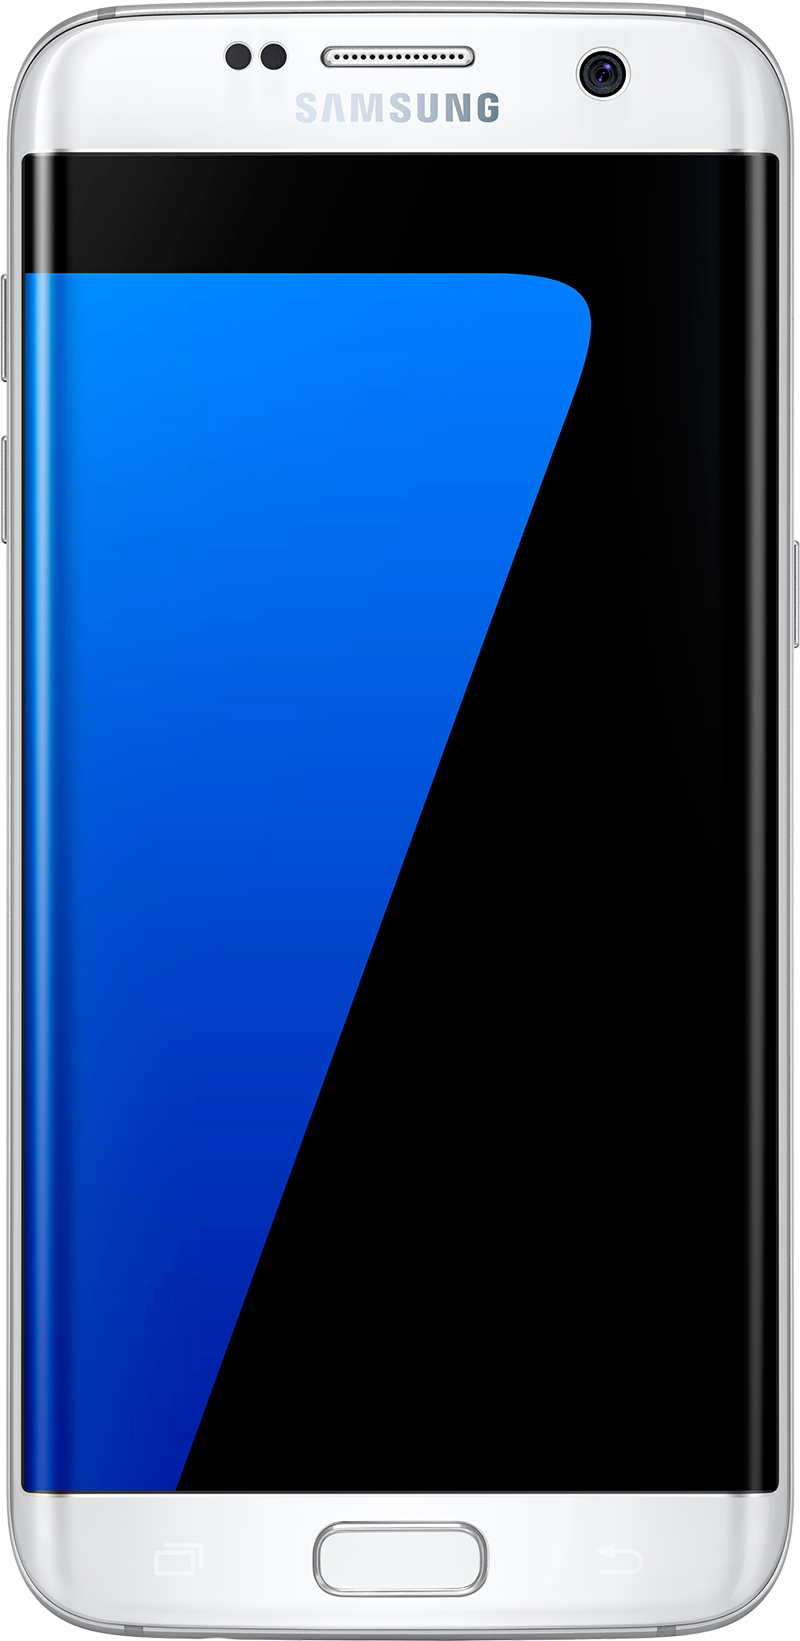 Samsung Galaxy S7 edge blanc 32Go